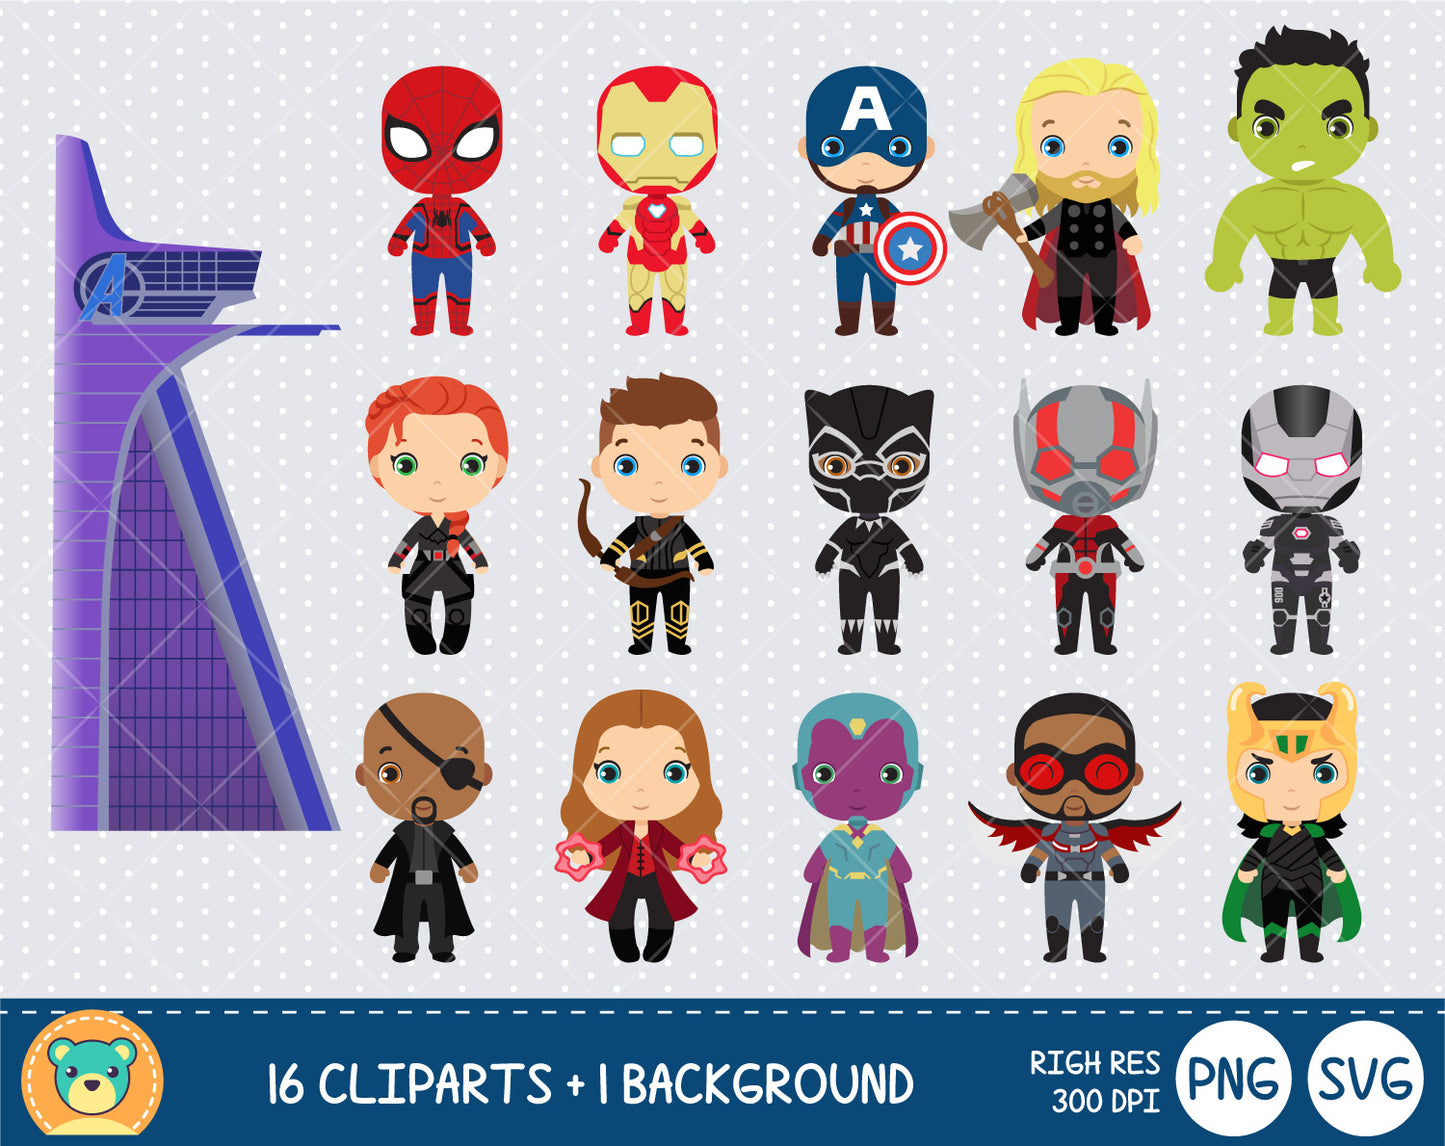 Cute Avengers clipart set, Superheroes clip art for decoration, scrapbooking, PNG, SVG, instant download